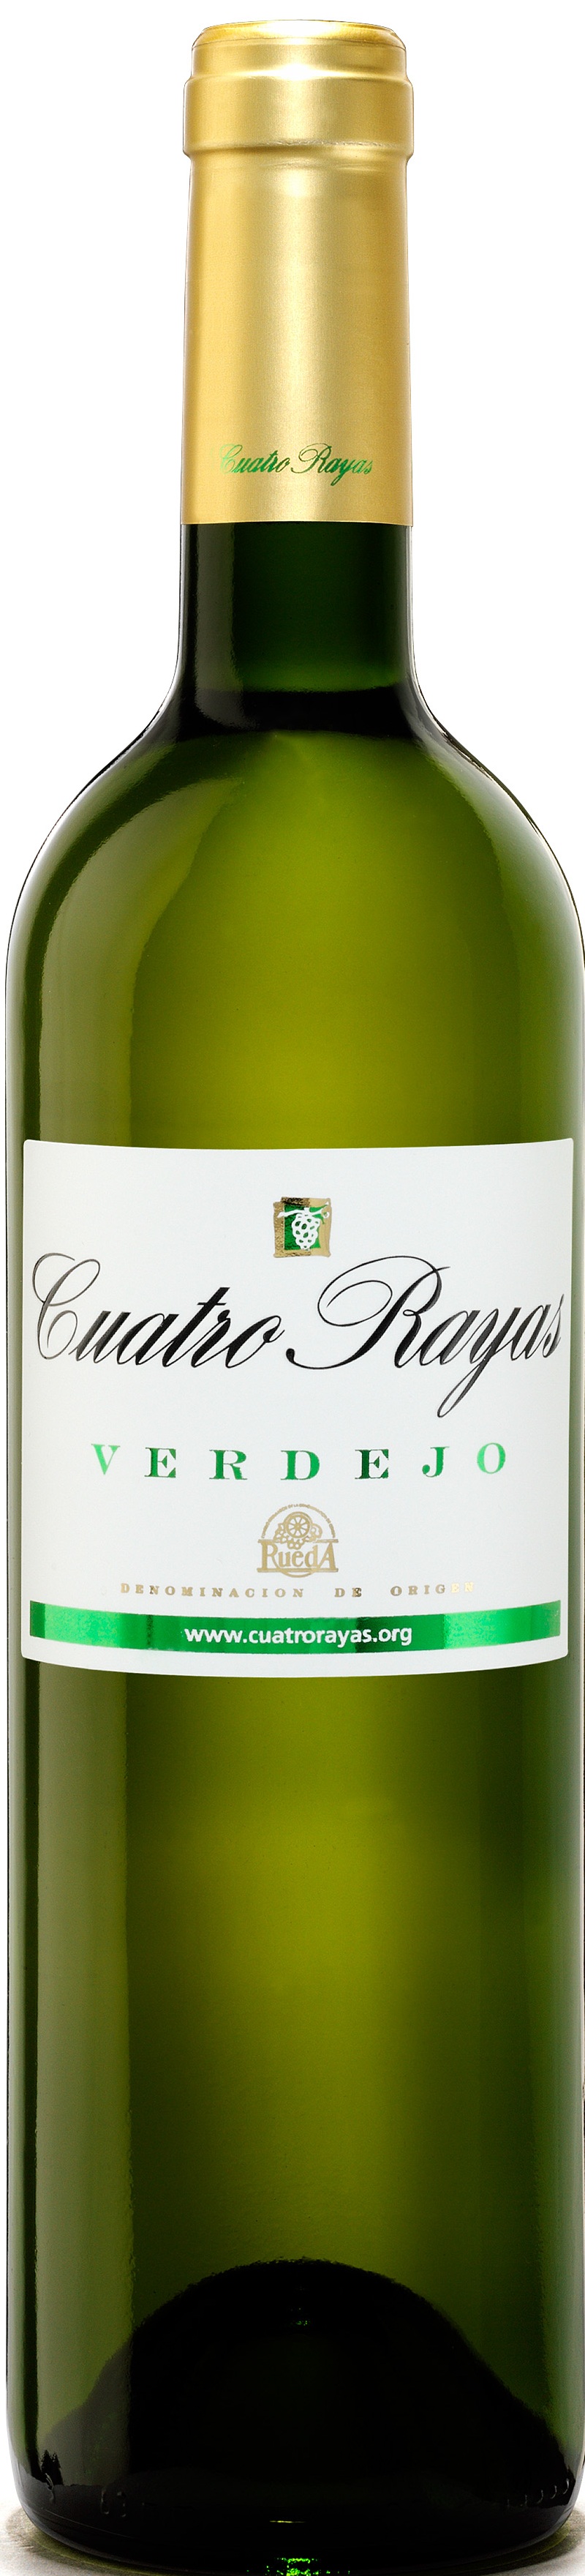 Image of Wine bottle Cuatro Rayas Verdejo